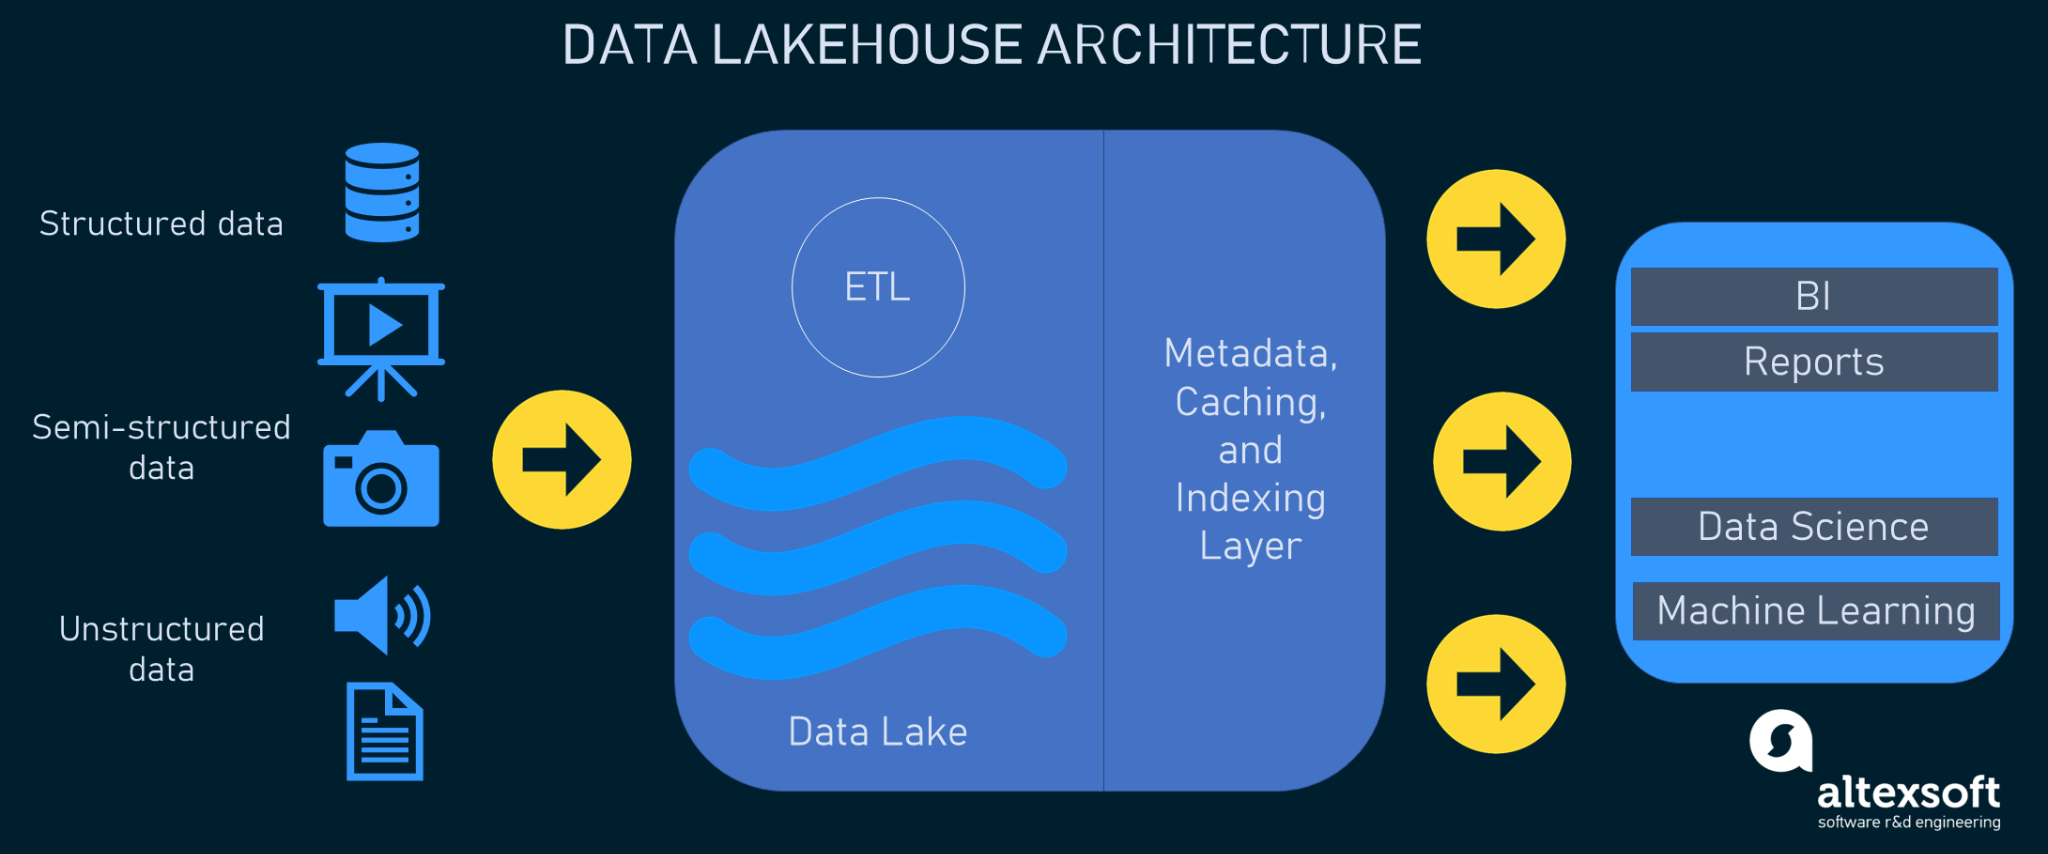 Lakehouse architecture